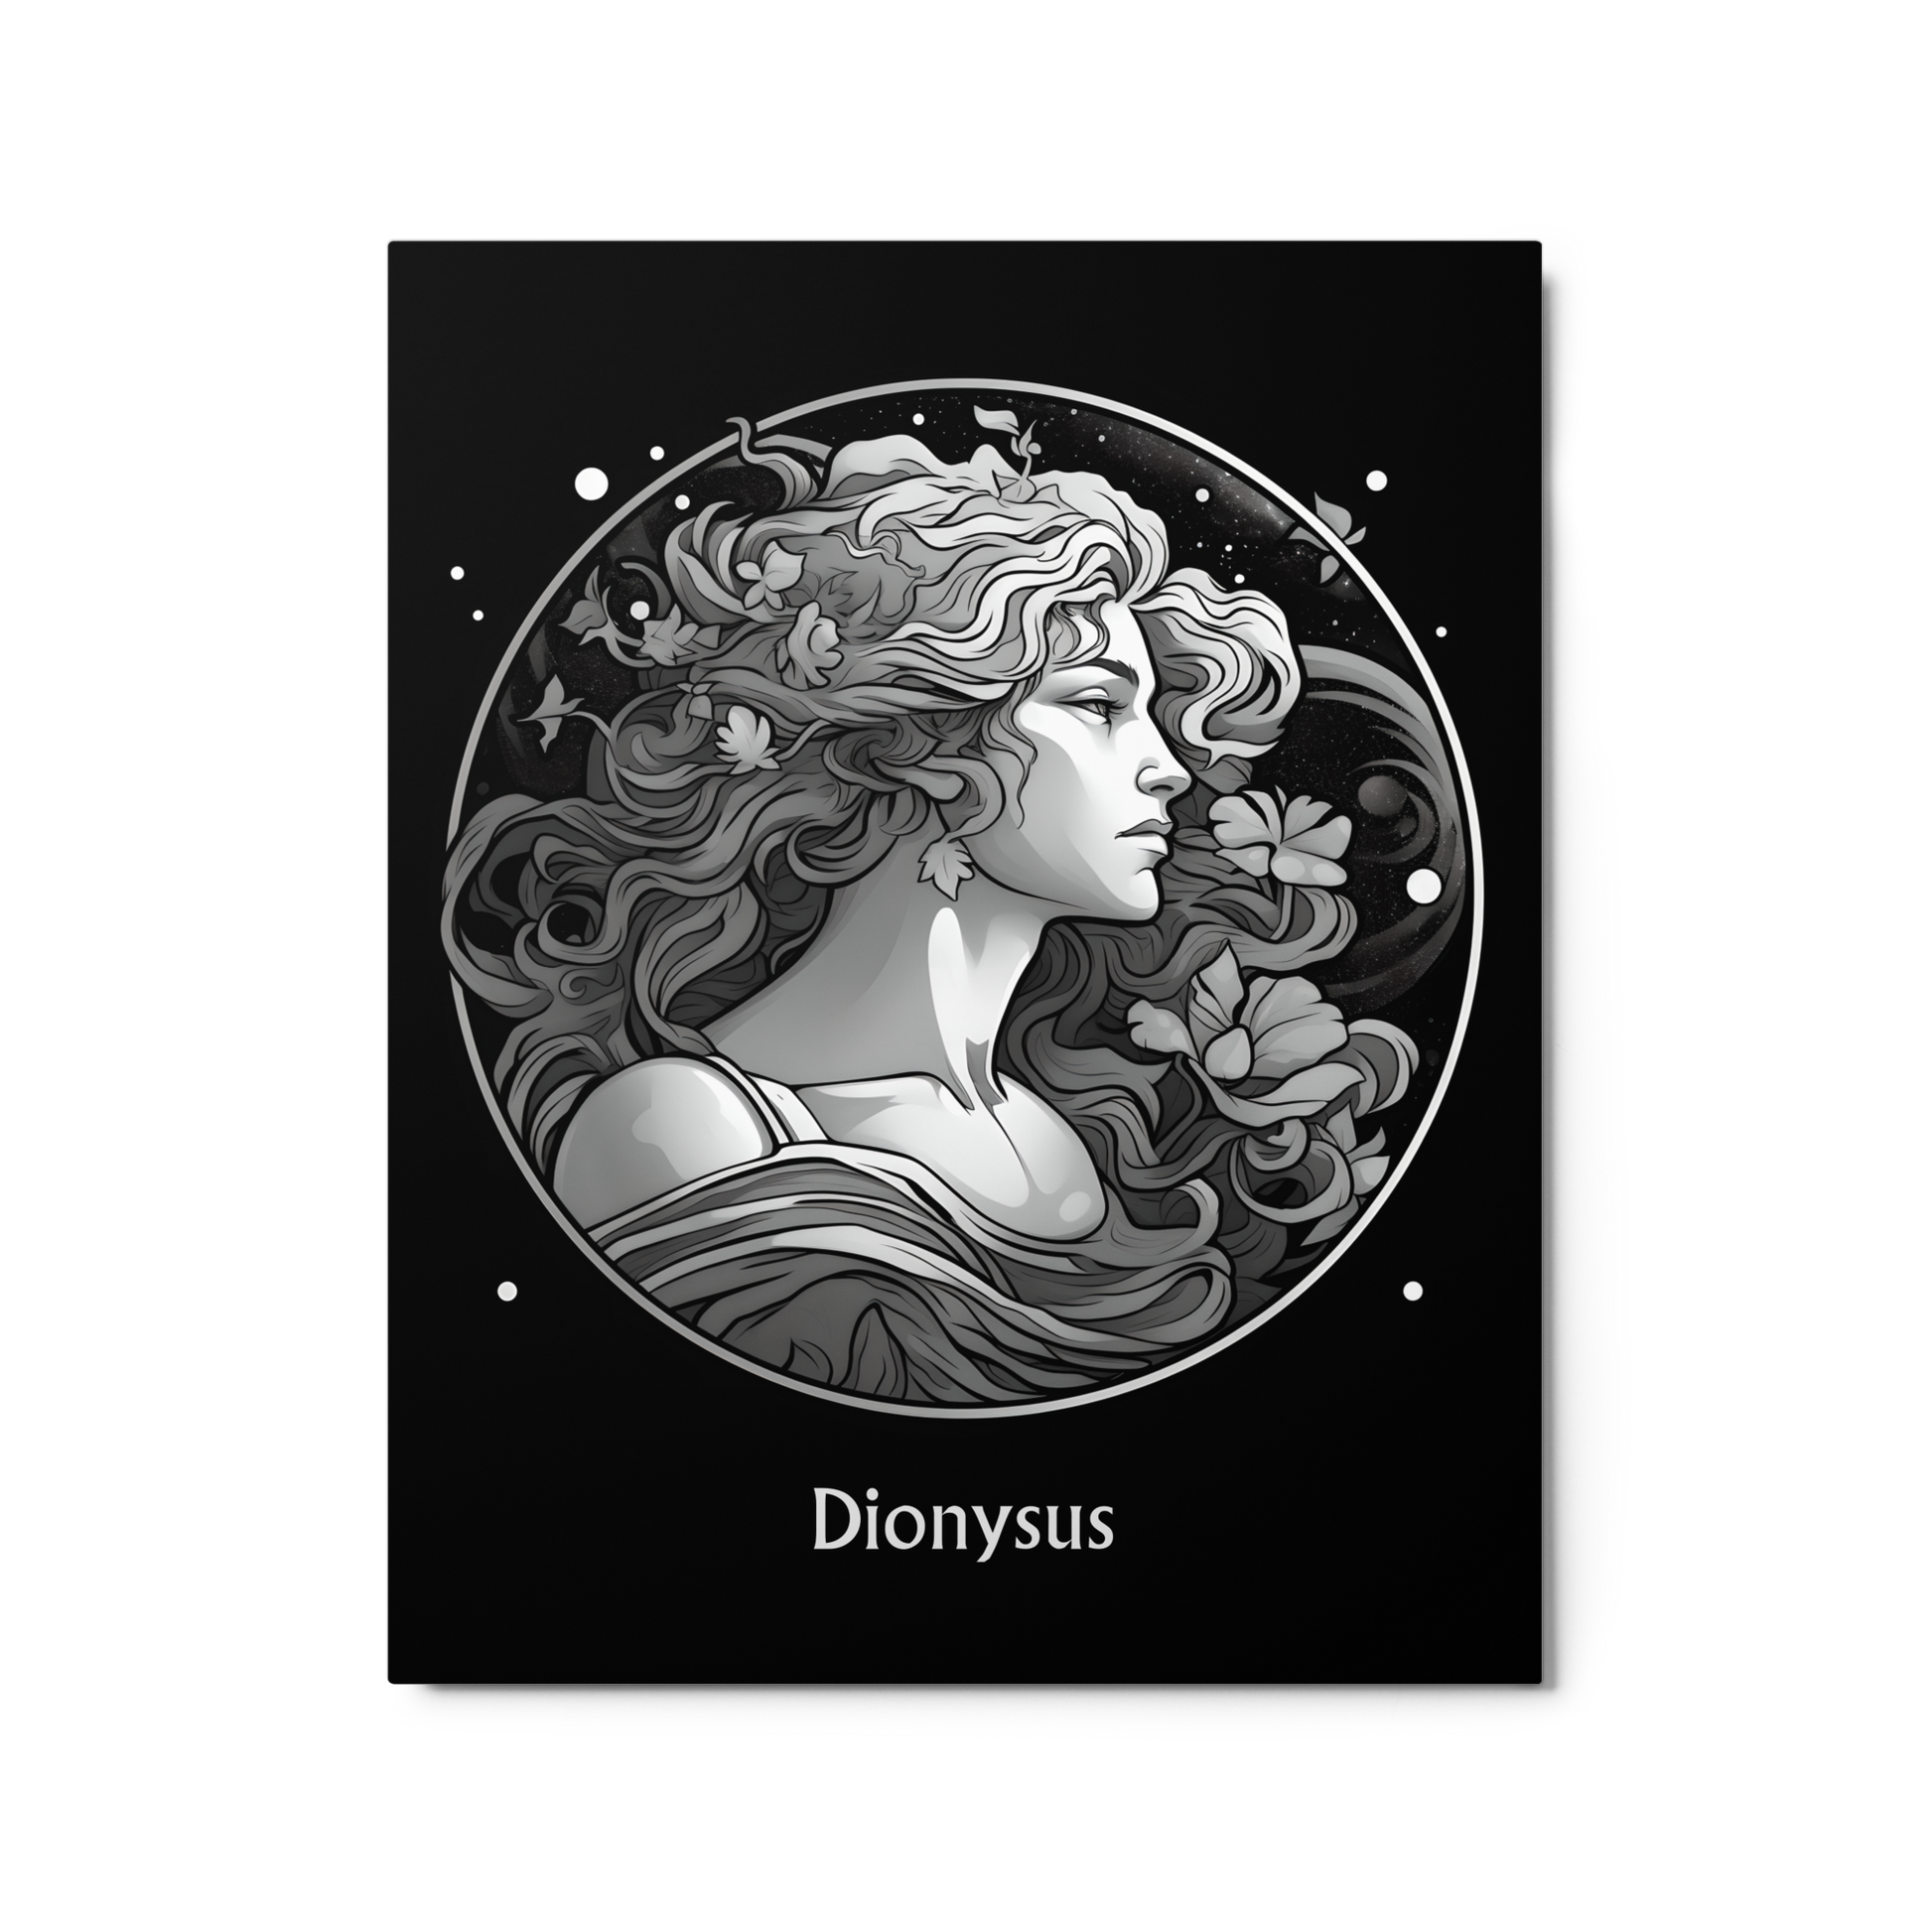 Dionysus' Ecstacy - Black and White Hanging Wall Art High Quality Metal Print DrawDadDraw